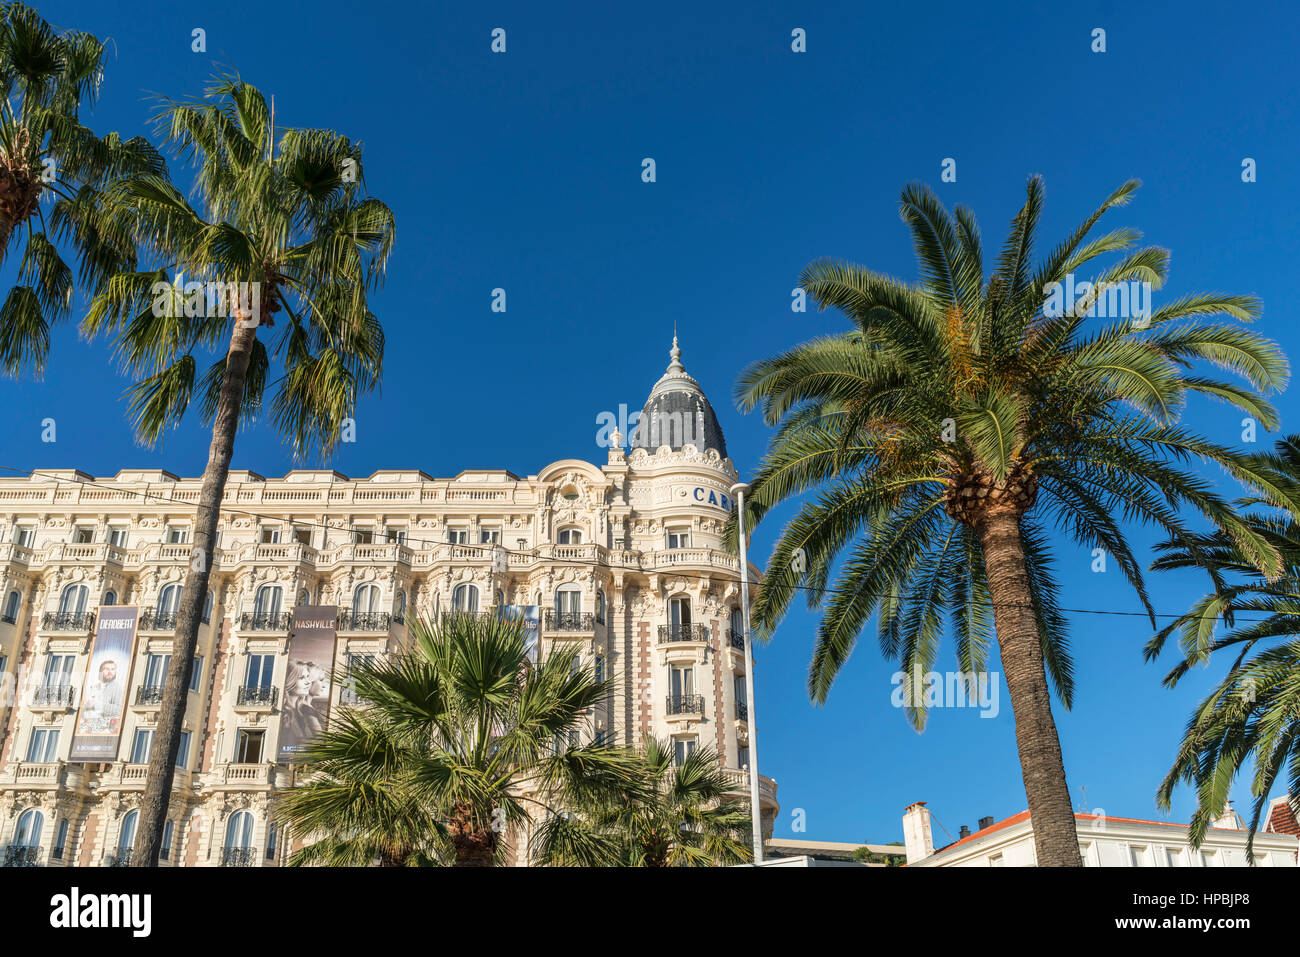 Carlton, Hotel, Facade, Promenade de Coisette,  Palm tree, Cannes, Cote d'Azur, France, Stock Photo